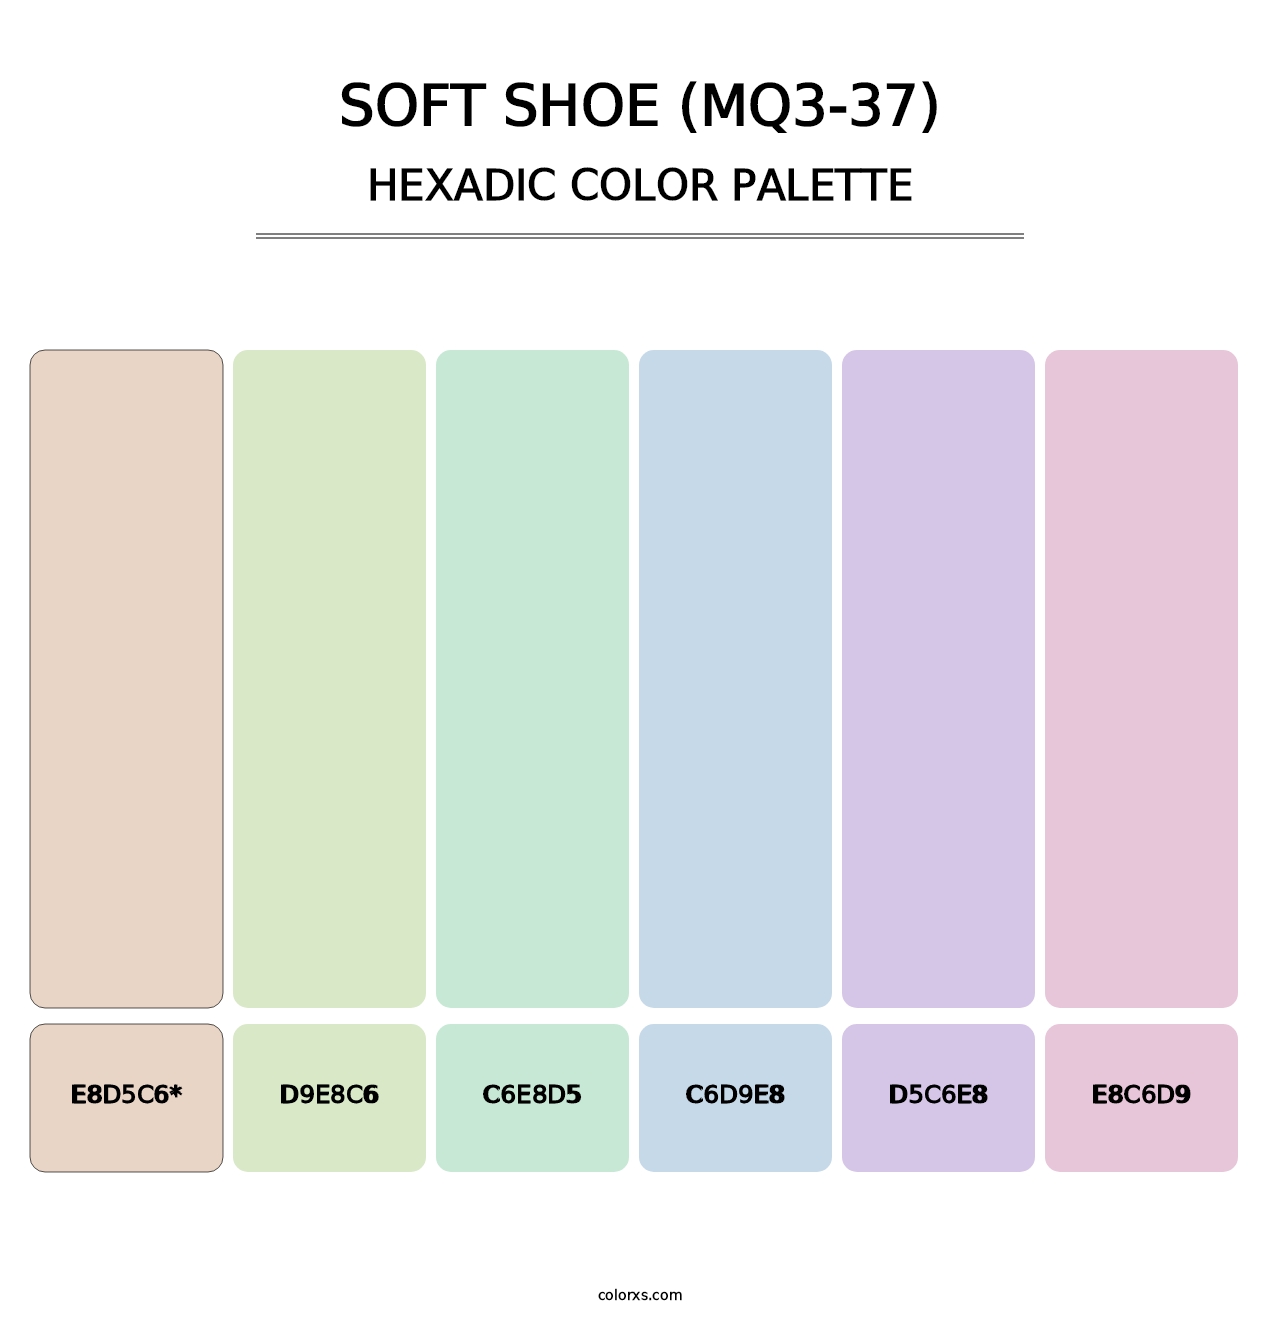 Soft Shoe (MQ3-37) - Hexadic Color Palette